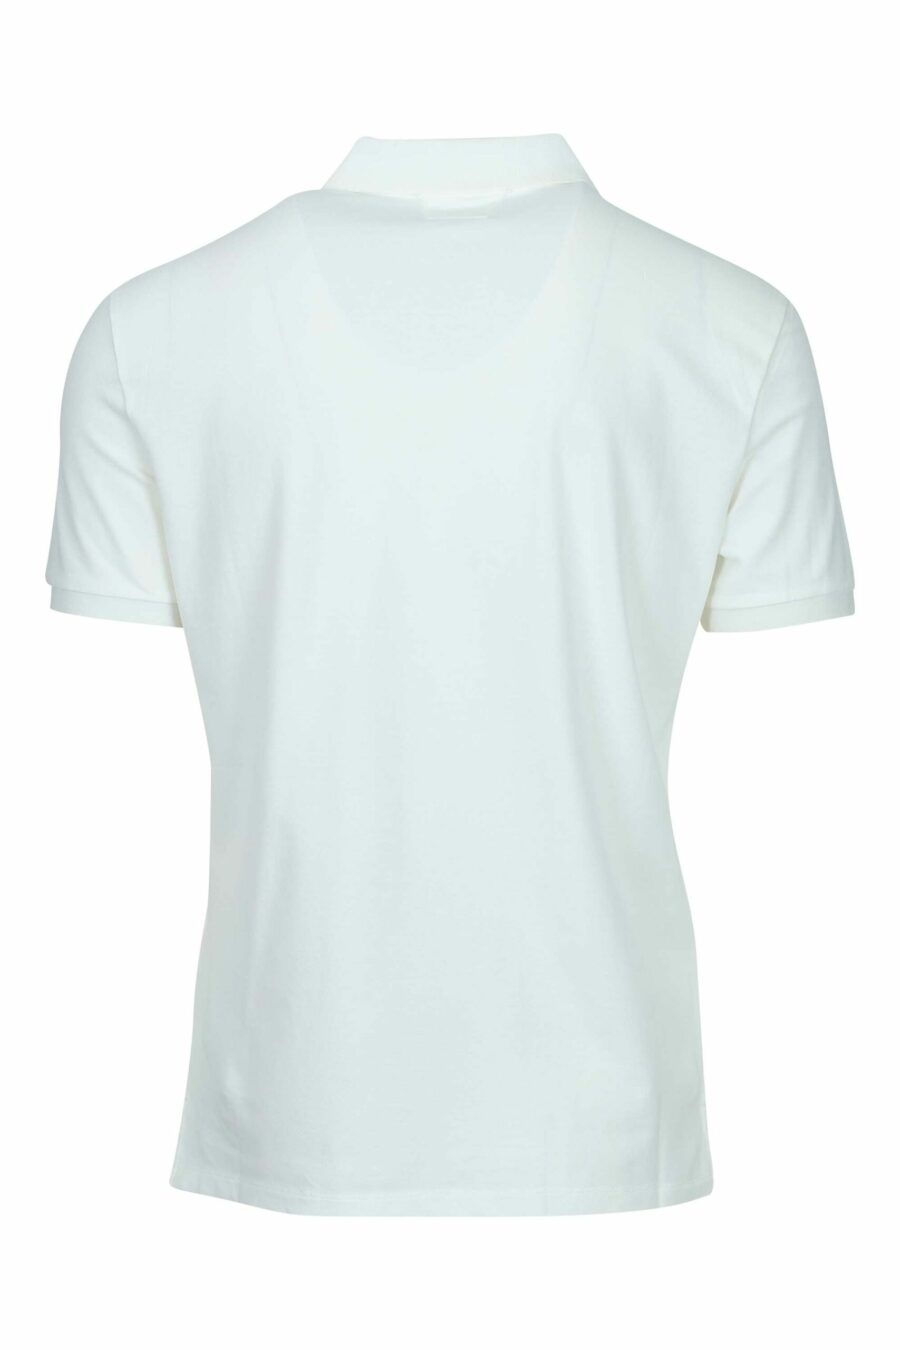 Weißes Poloshirt mit Mini-Logoaufnäher "cp" - 7620943728392 1 skaliert